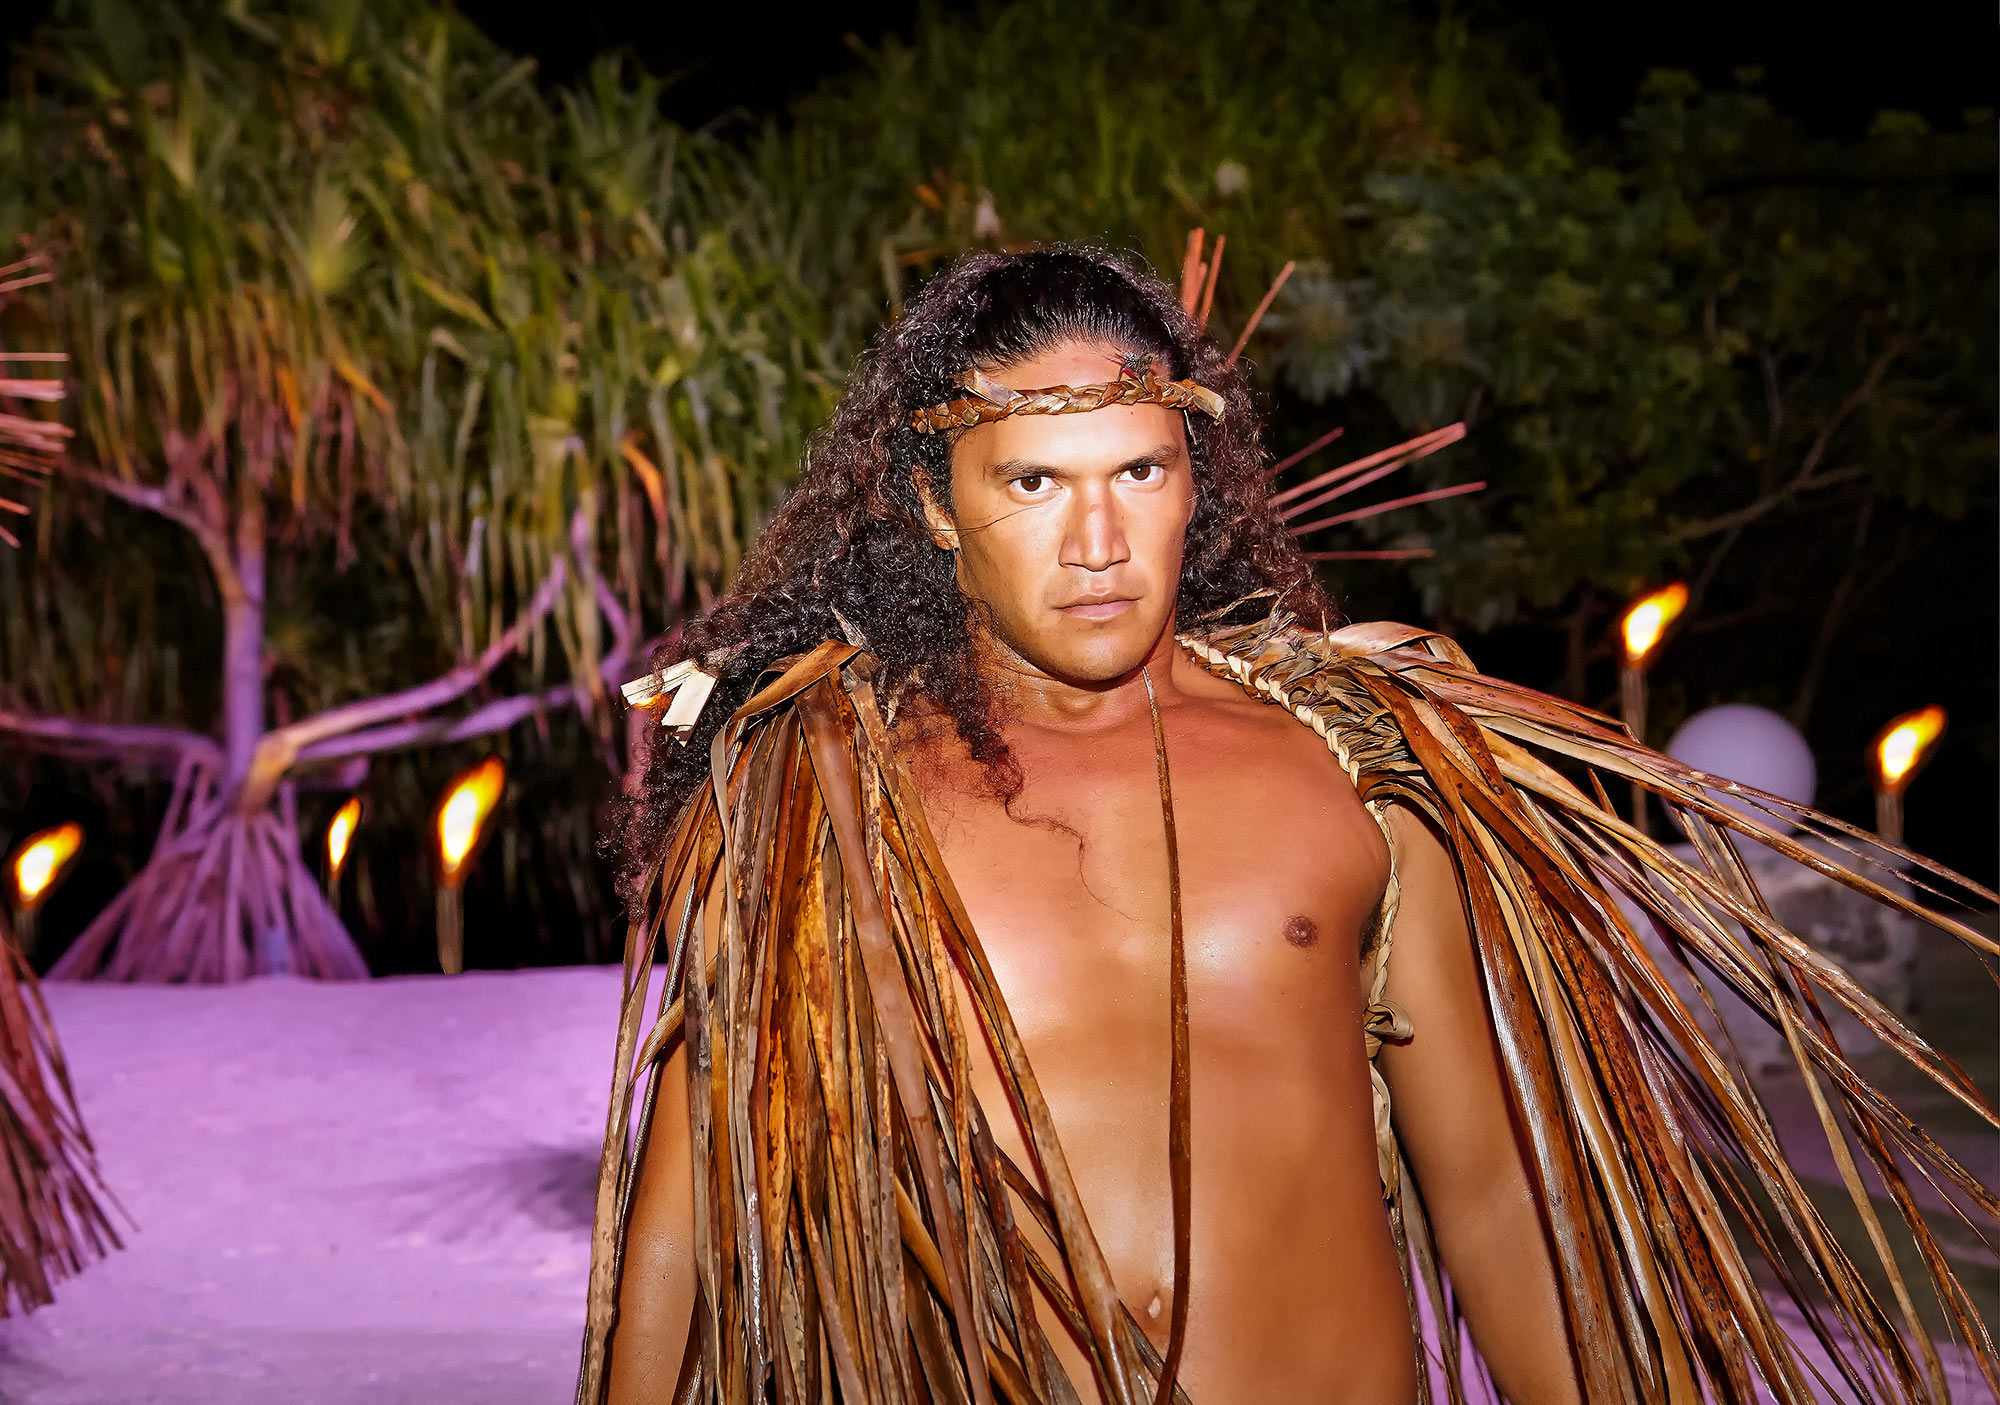 Tahiti-Travel-Photography-Warrior-With-Tiki-Torches